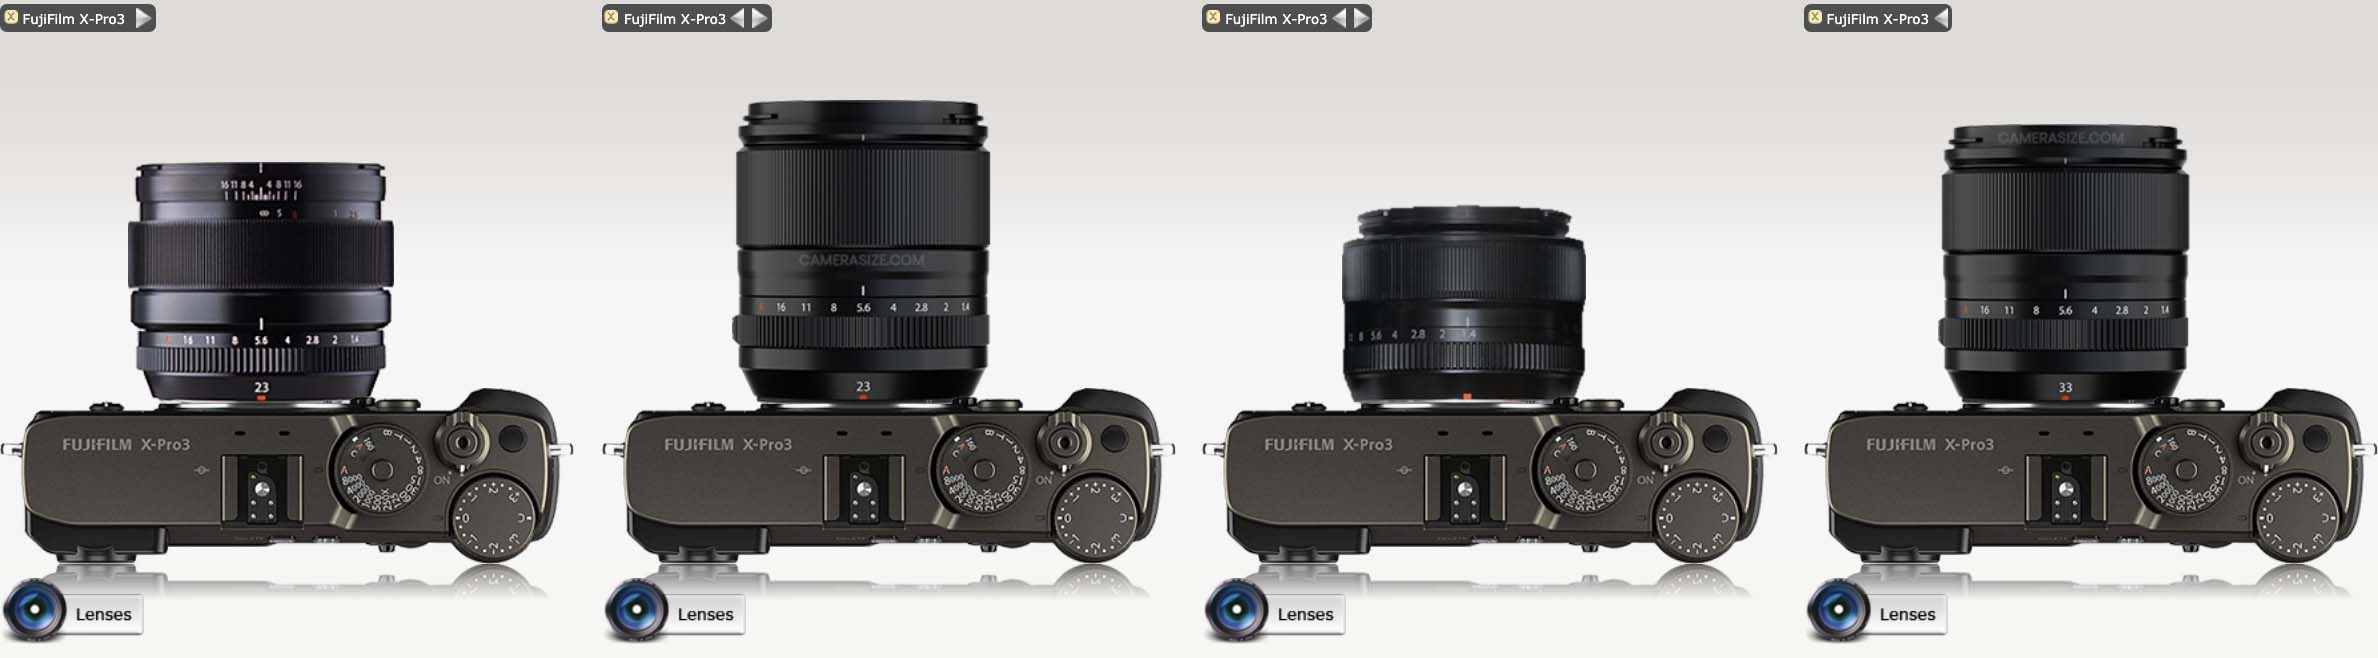 Zeug Soeverein Rose kleur New Fujifilm Lens Size Comparison: XF23mm f/1.4 V1, XF23mm f/1.4 V2, Xf33mm  f/1.4, and XF35mm f/1.4 - Fuji Addict